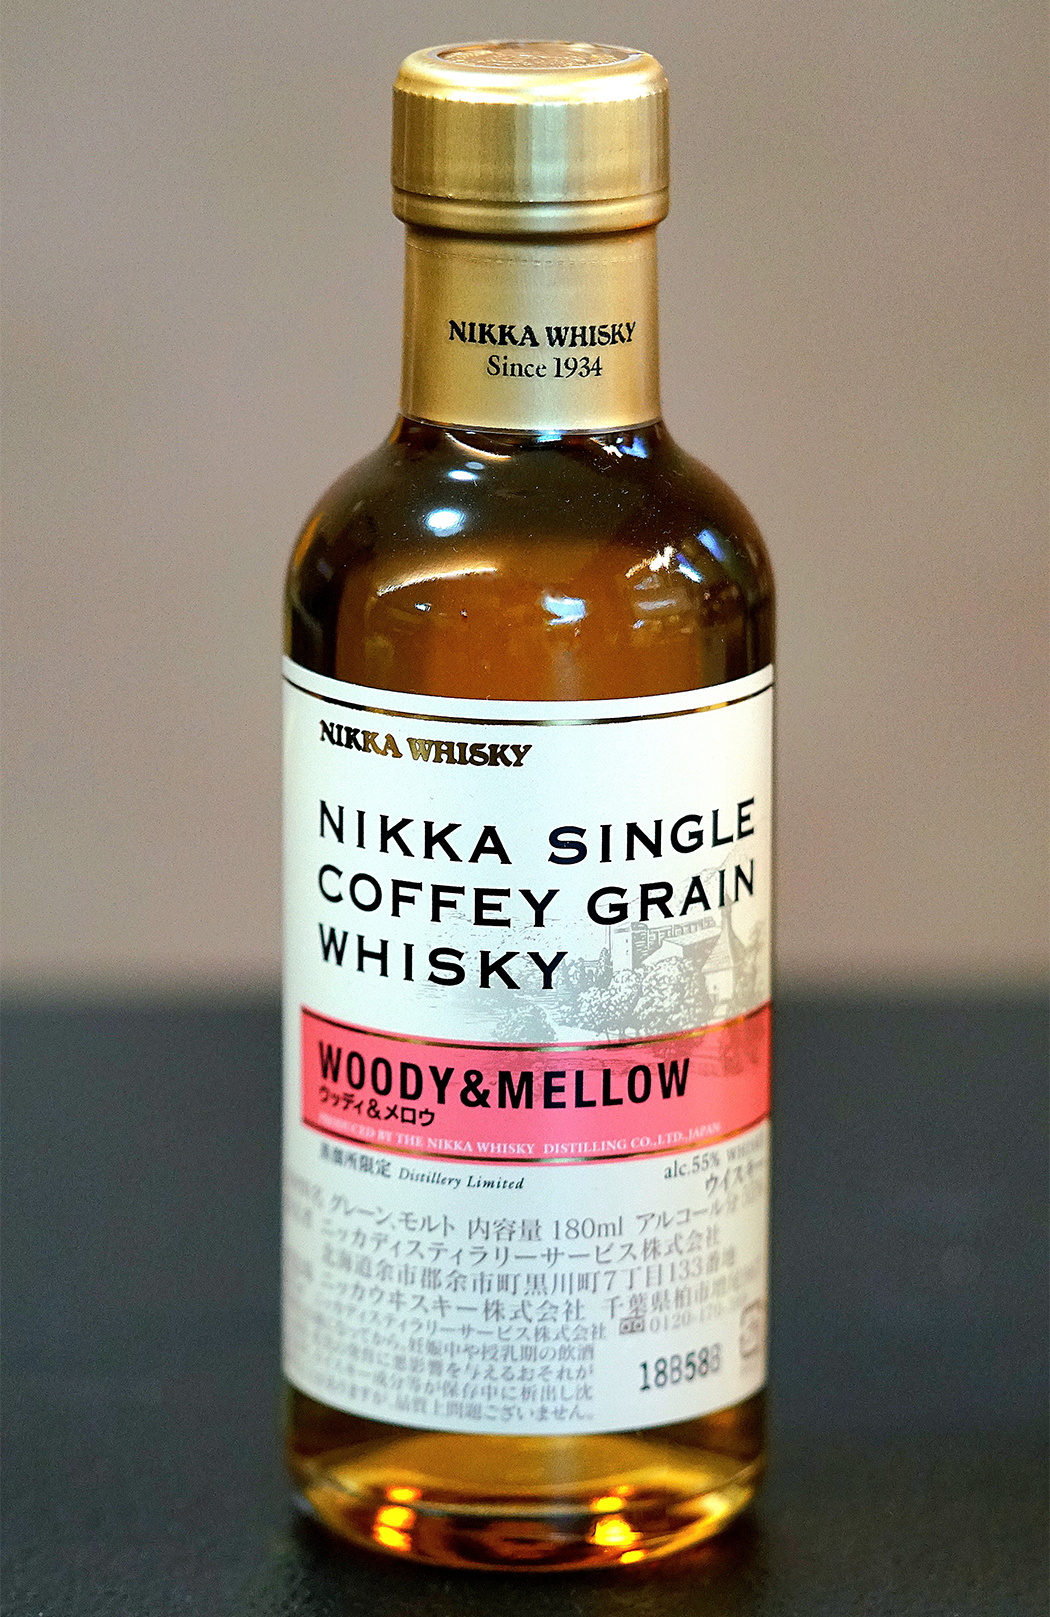 Nikka 'Woody and Mellow' Single Coffey Grain